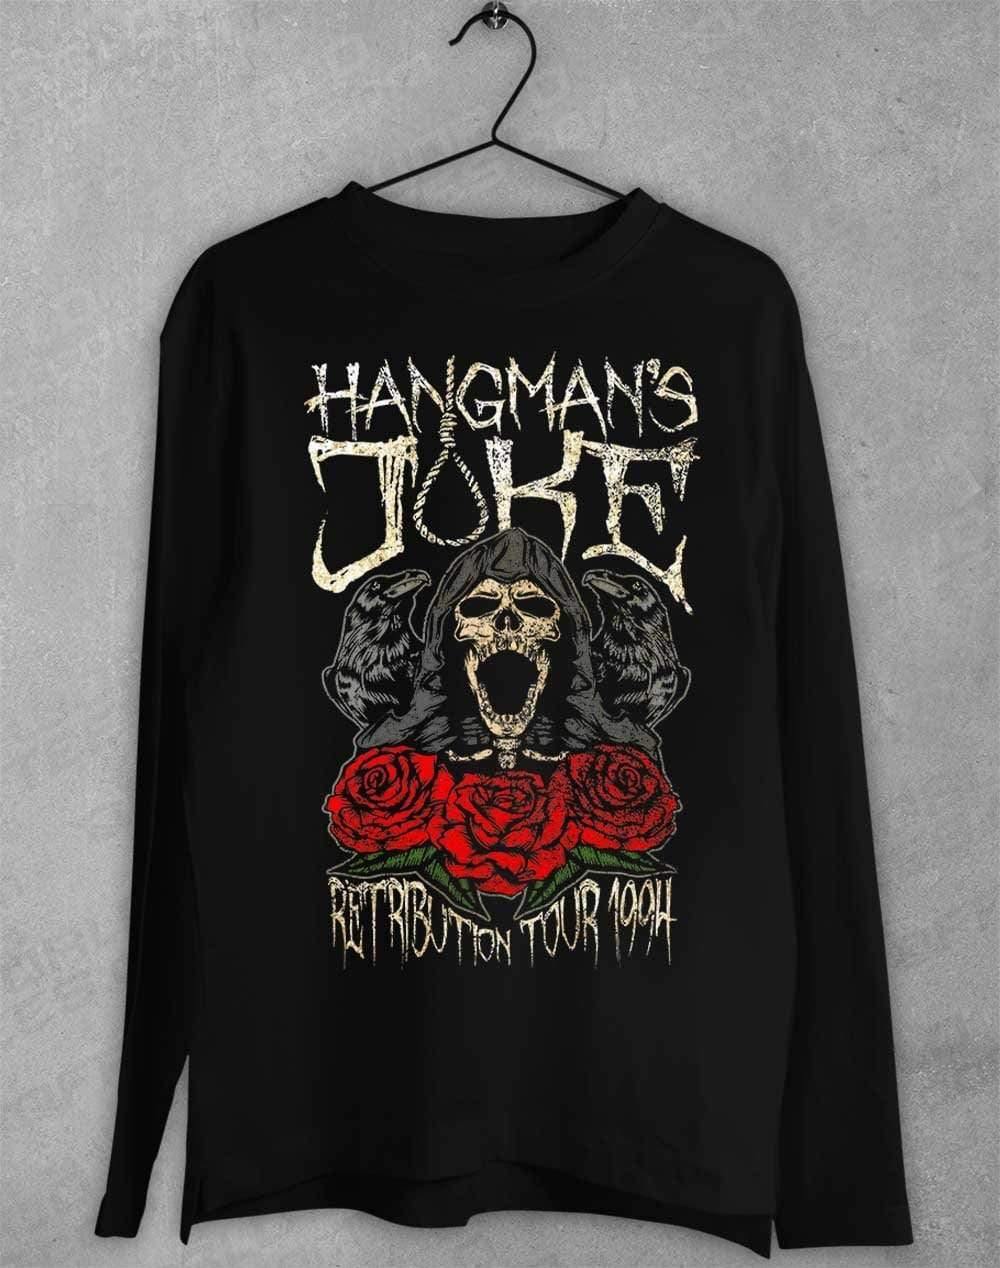 Hangman's Joke Retribution Tour 94 Long Sleeve T-Shirt S / Black  - Off World Tees